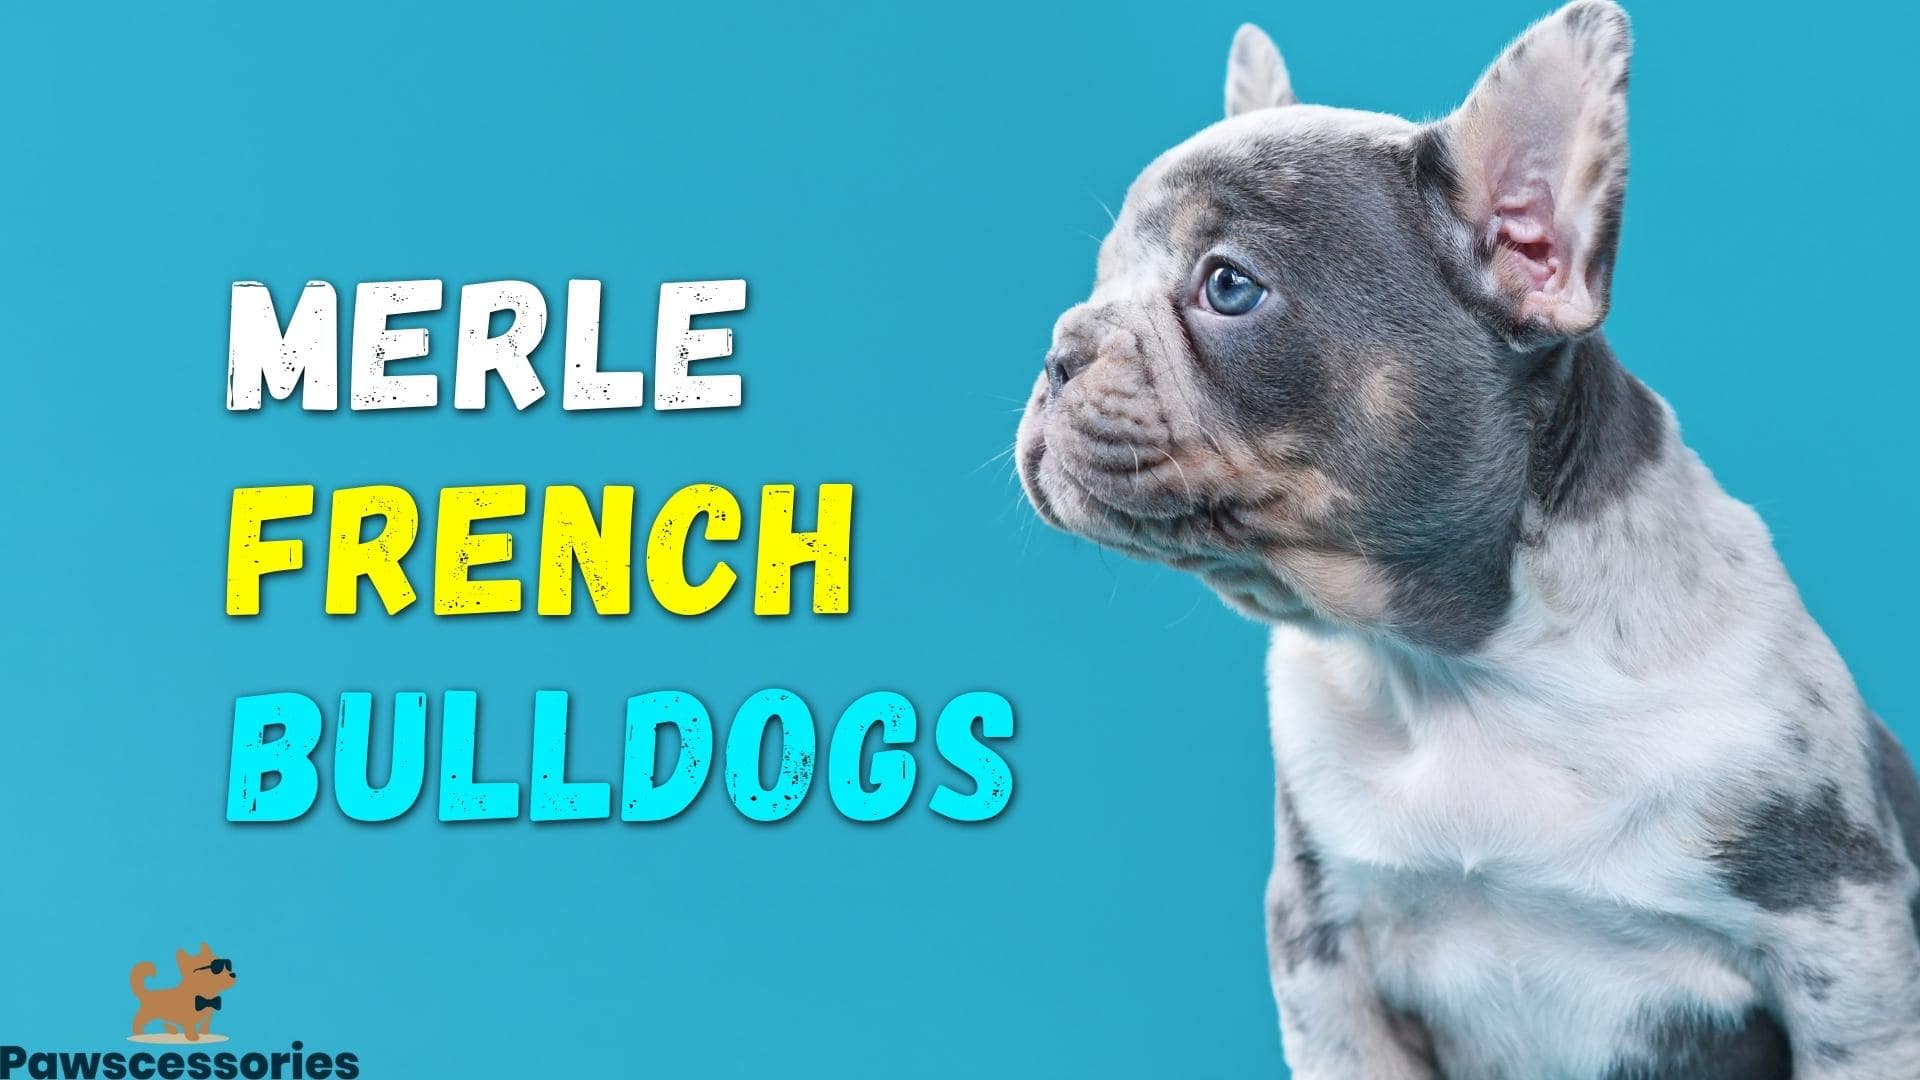 Blue Merle French Bulldog